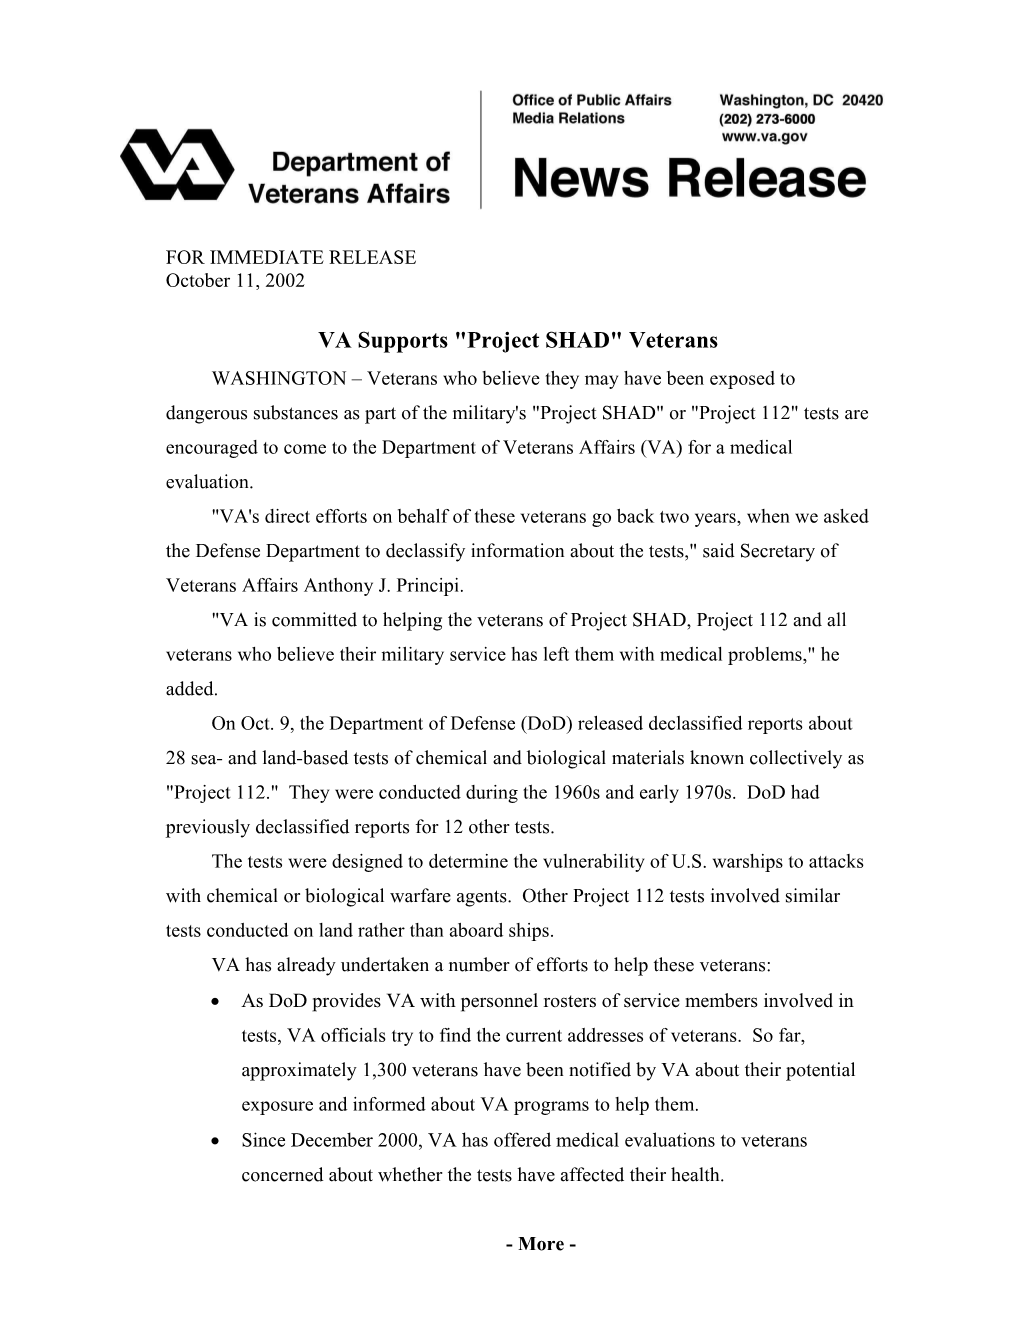 VA Supports Project SHAD Veterans